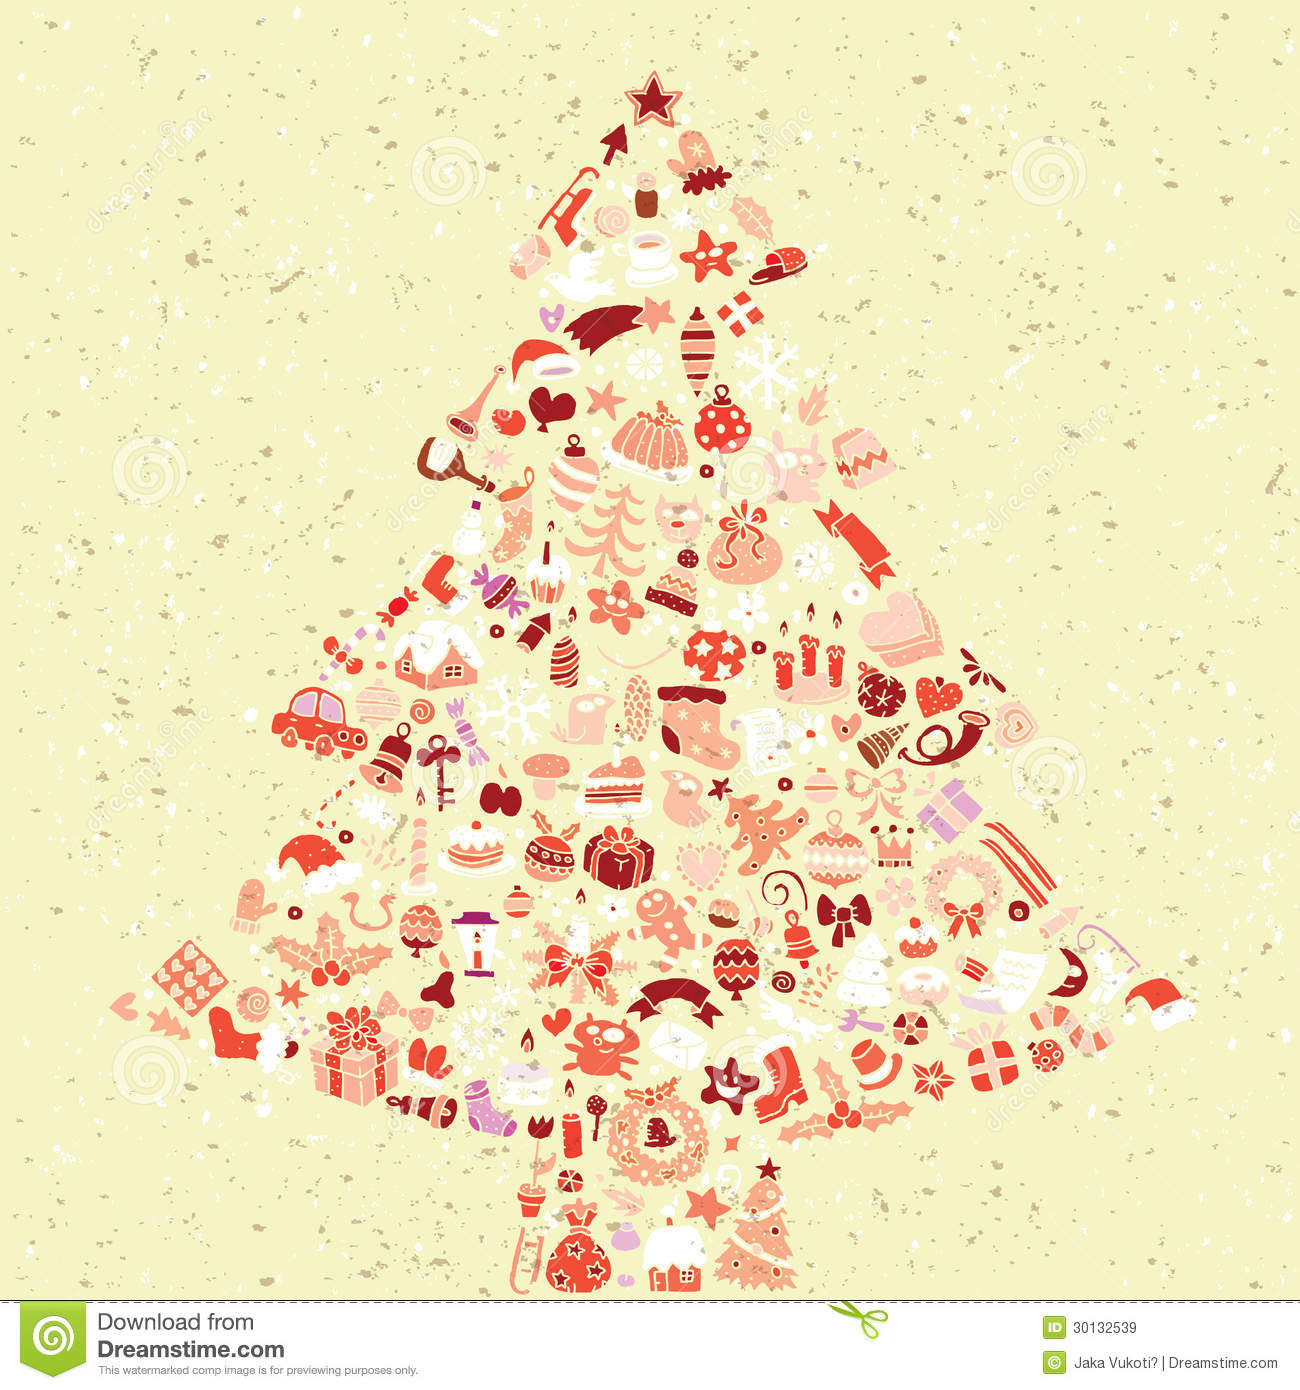 Christmas Tree Made of Squares